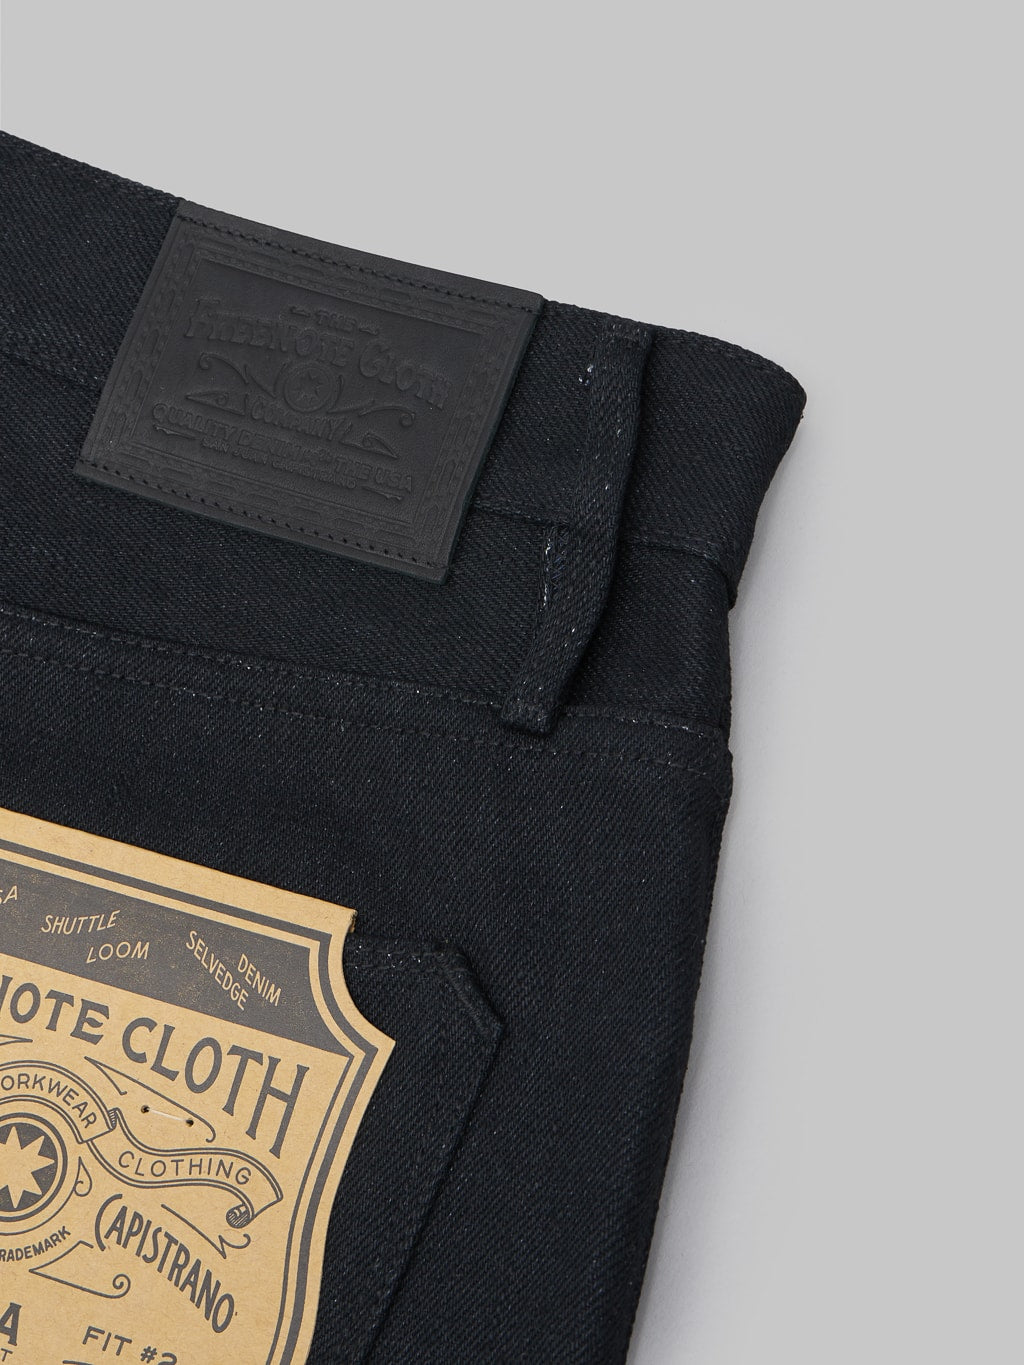 Freenote Cloth Avila 17oz Black Denim Slim Taper Jeans leather patch